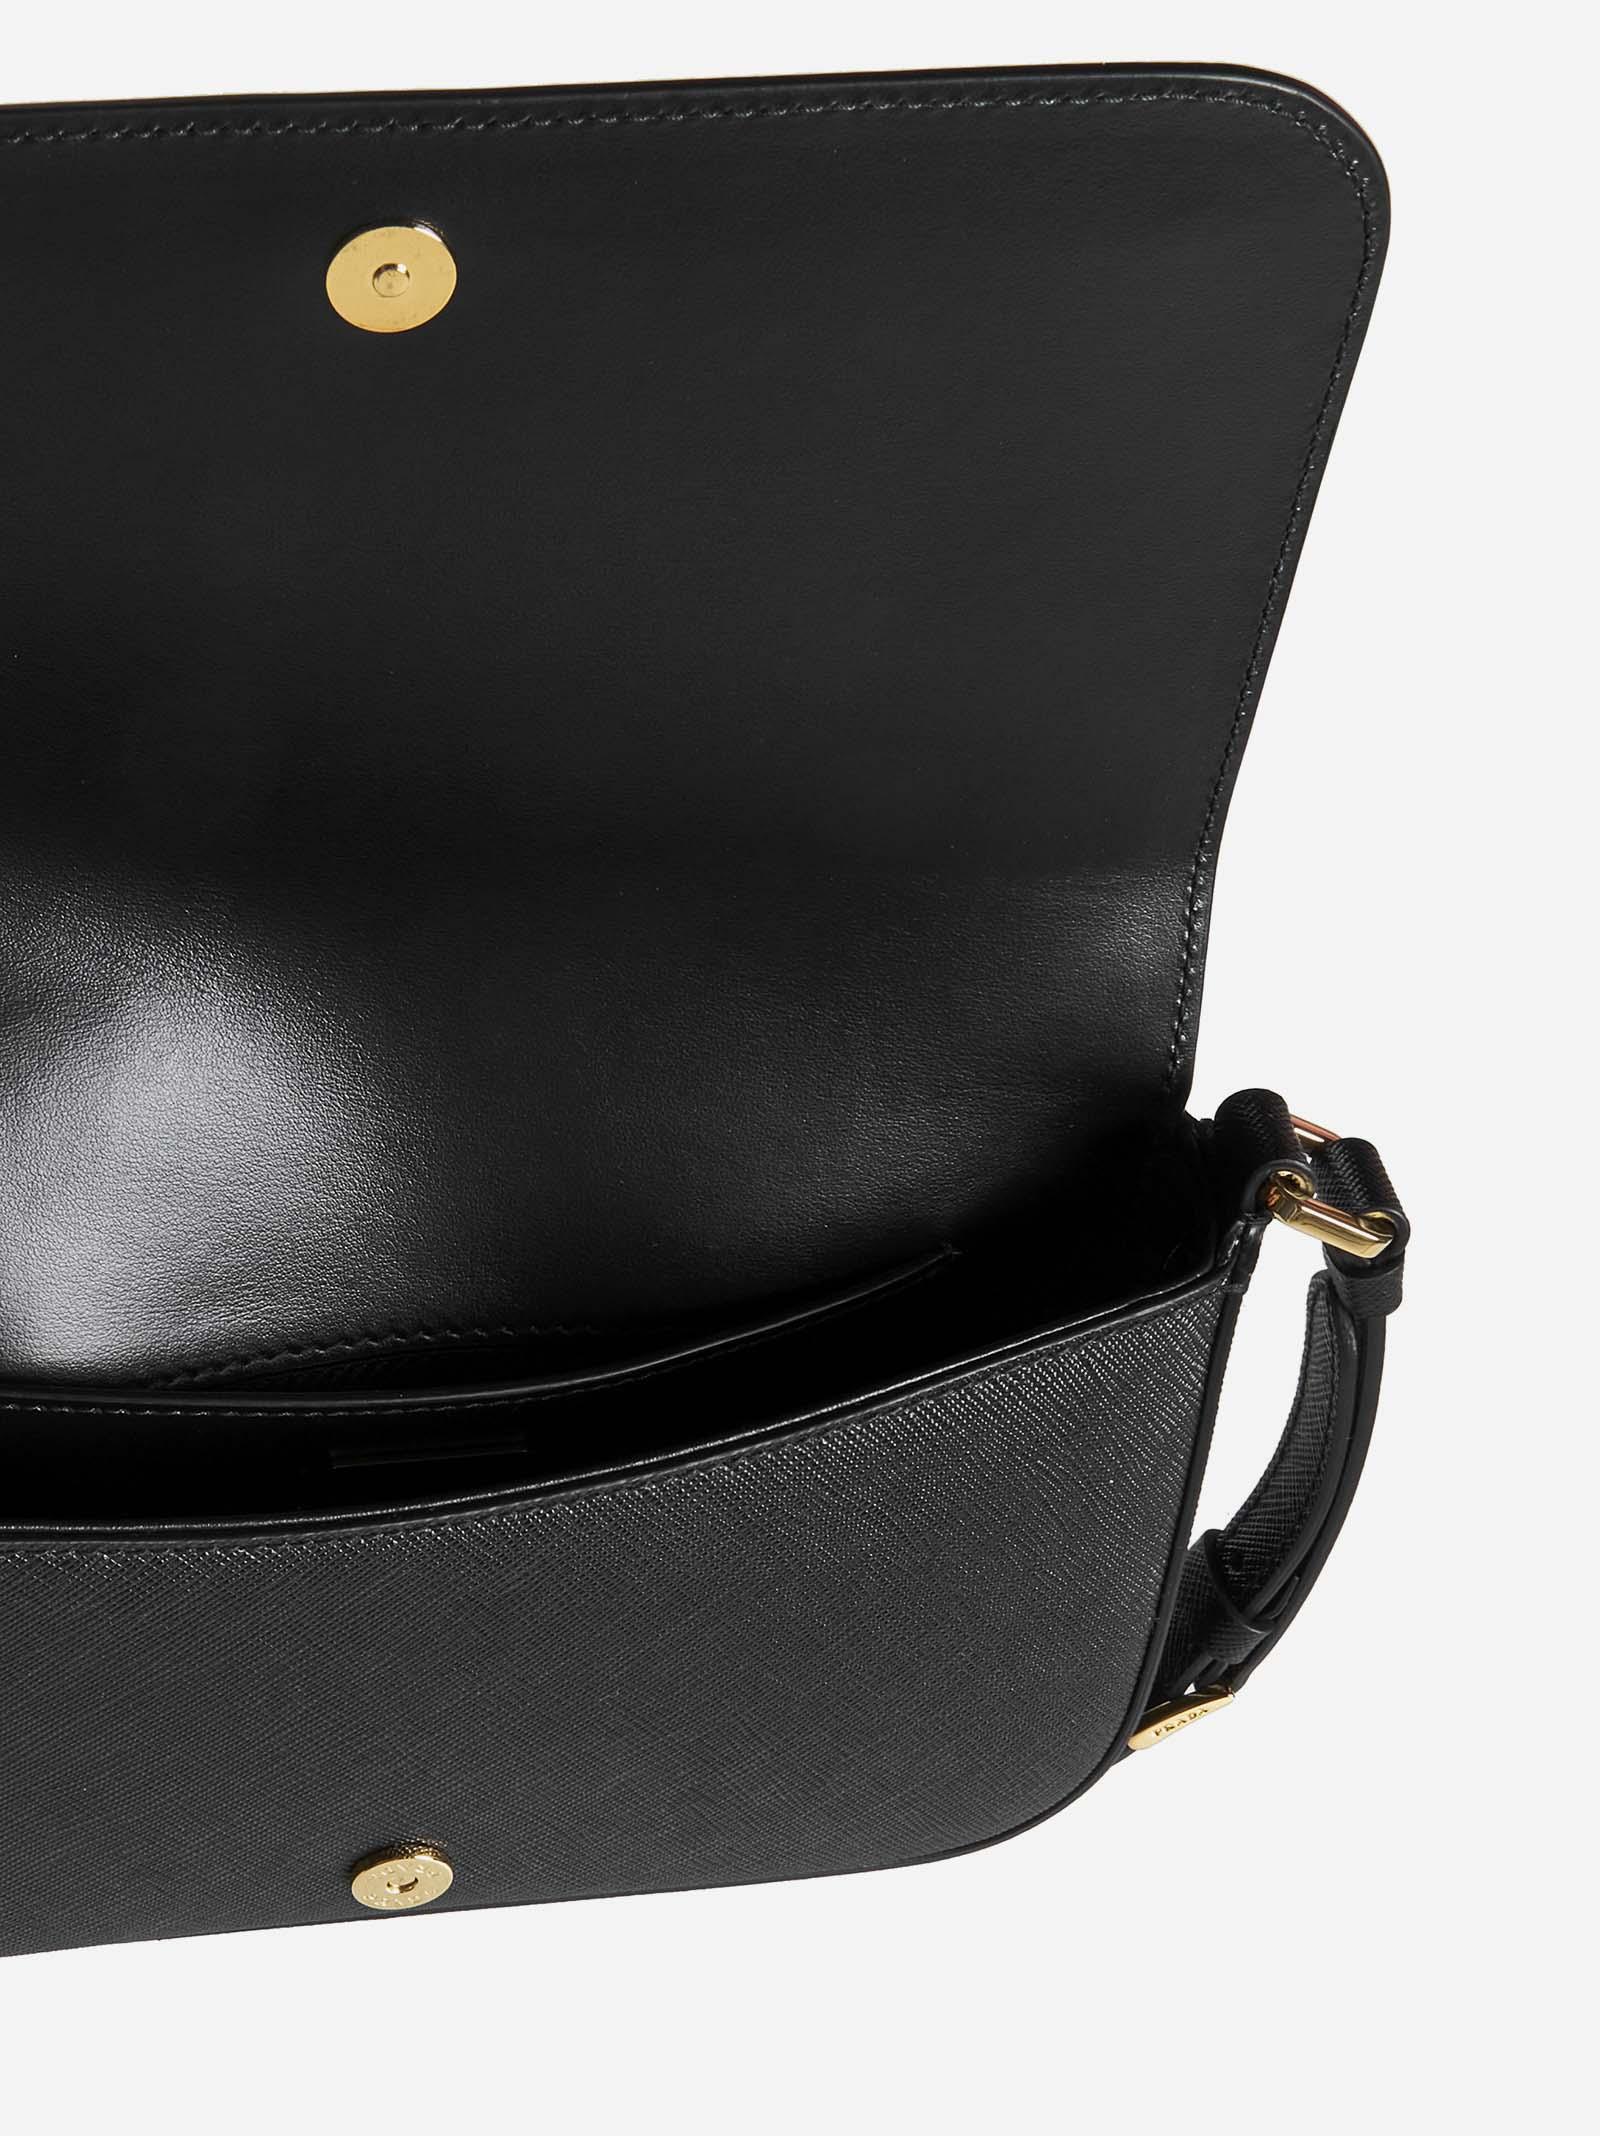 Prada Saffiano Leather Shoulder Bag in White